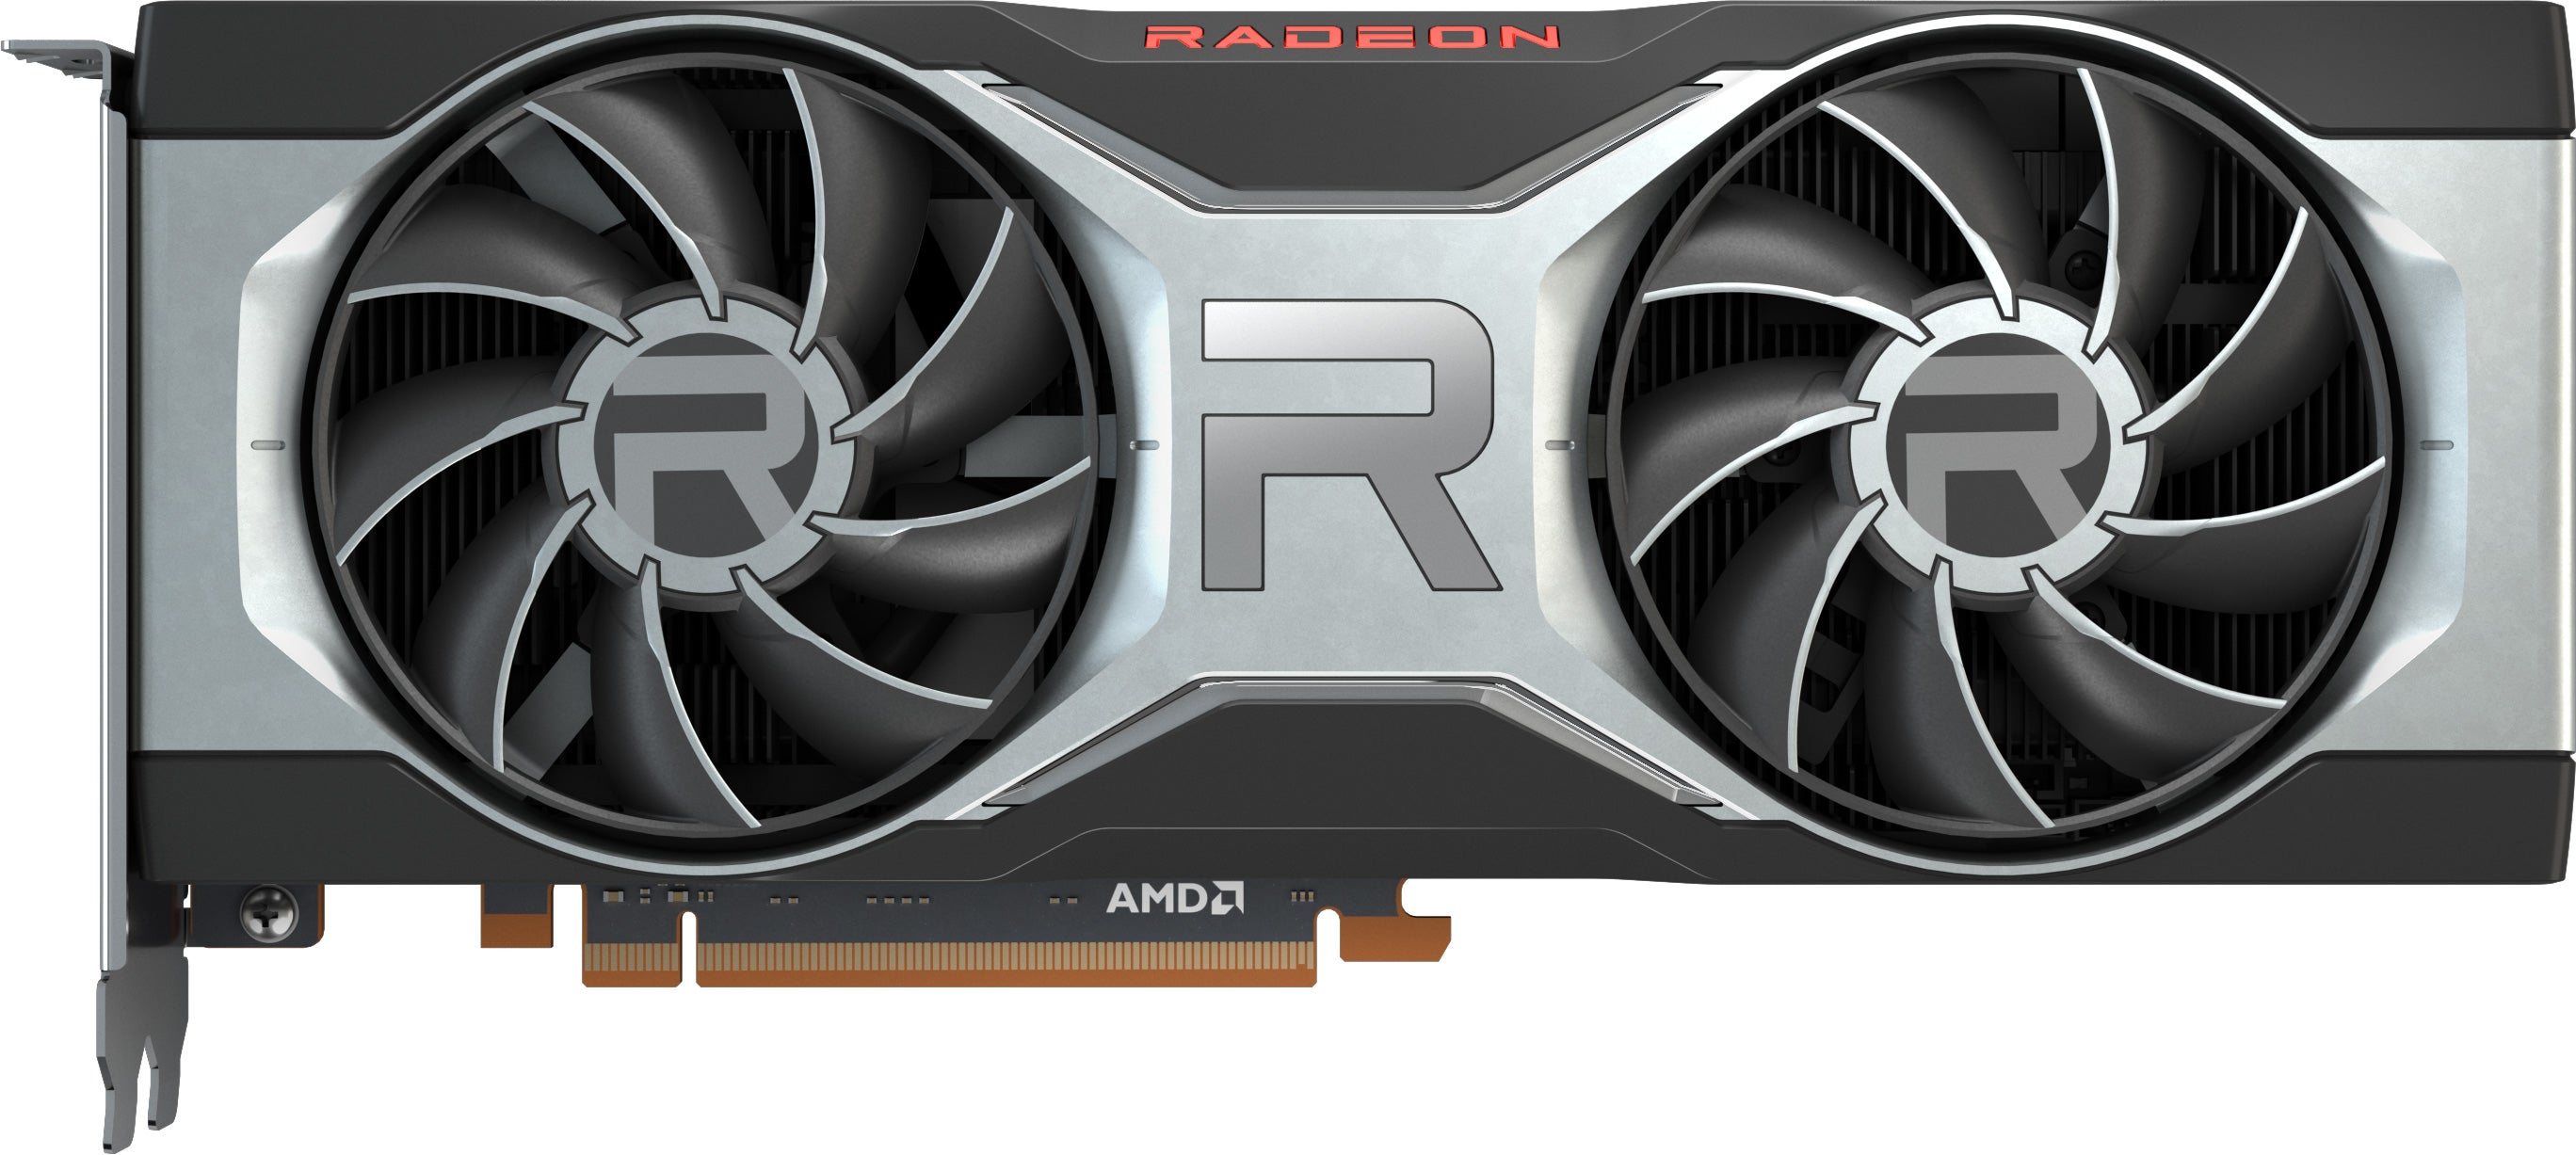 AMD GPU price ladder: best UK deals on AMD 6000-series graphics cards